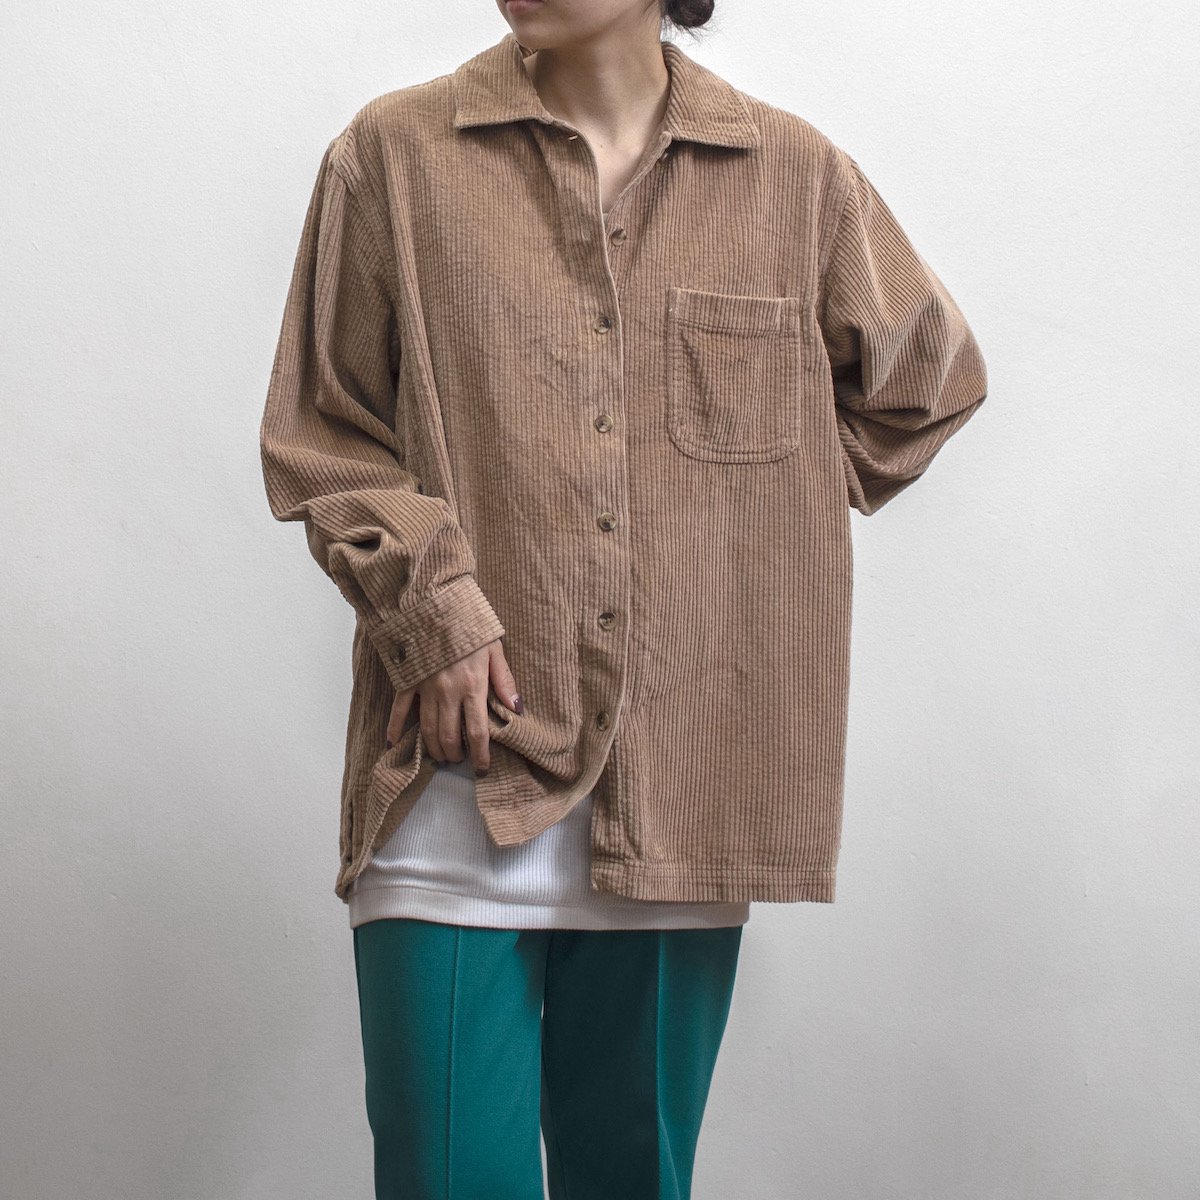 90s LLBean コーデュロイシャツ ジャケット 女子 vintage